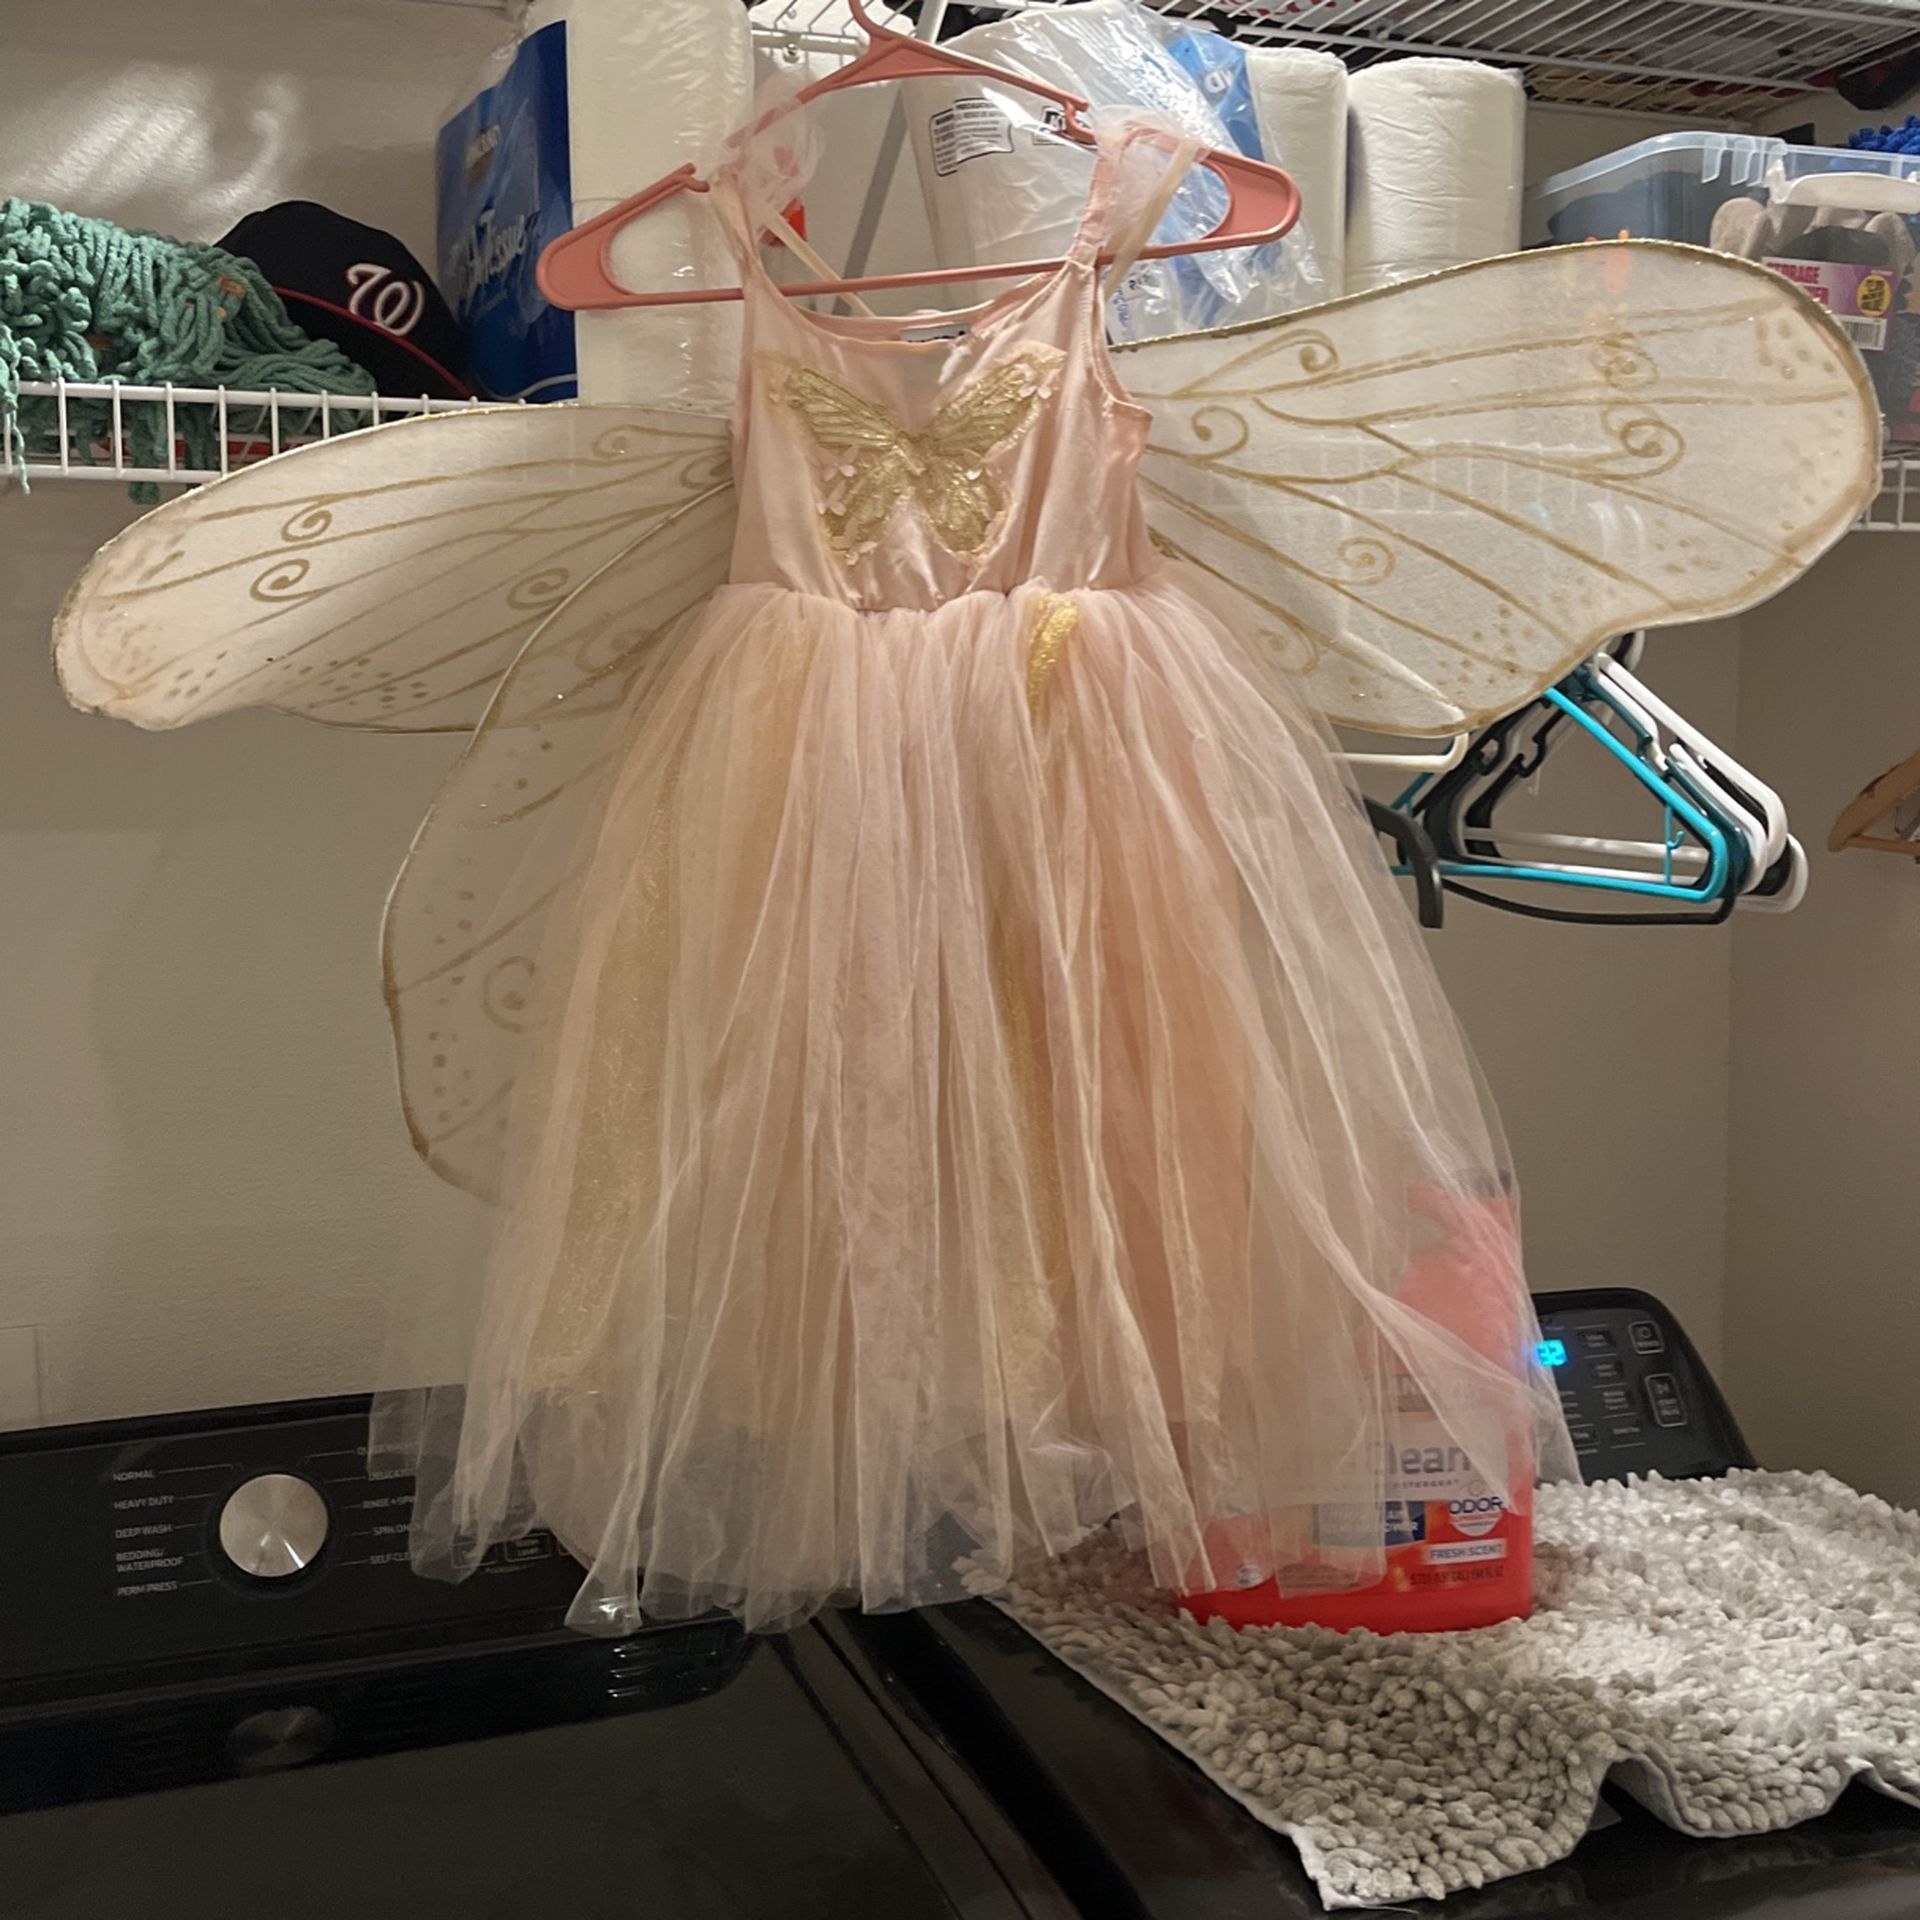 Fairy Dress